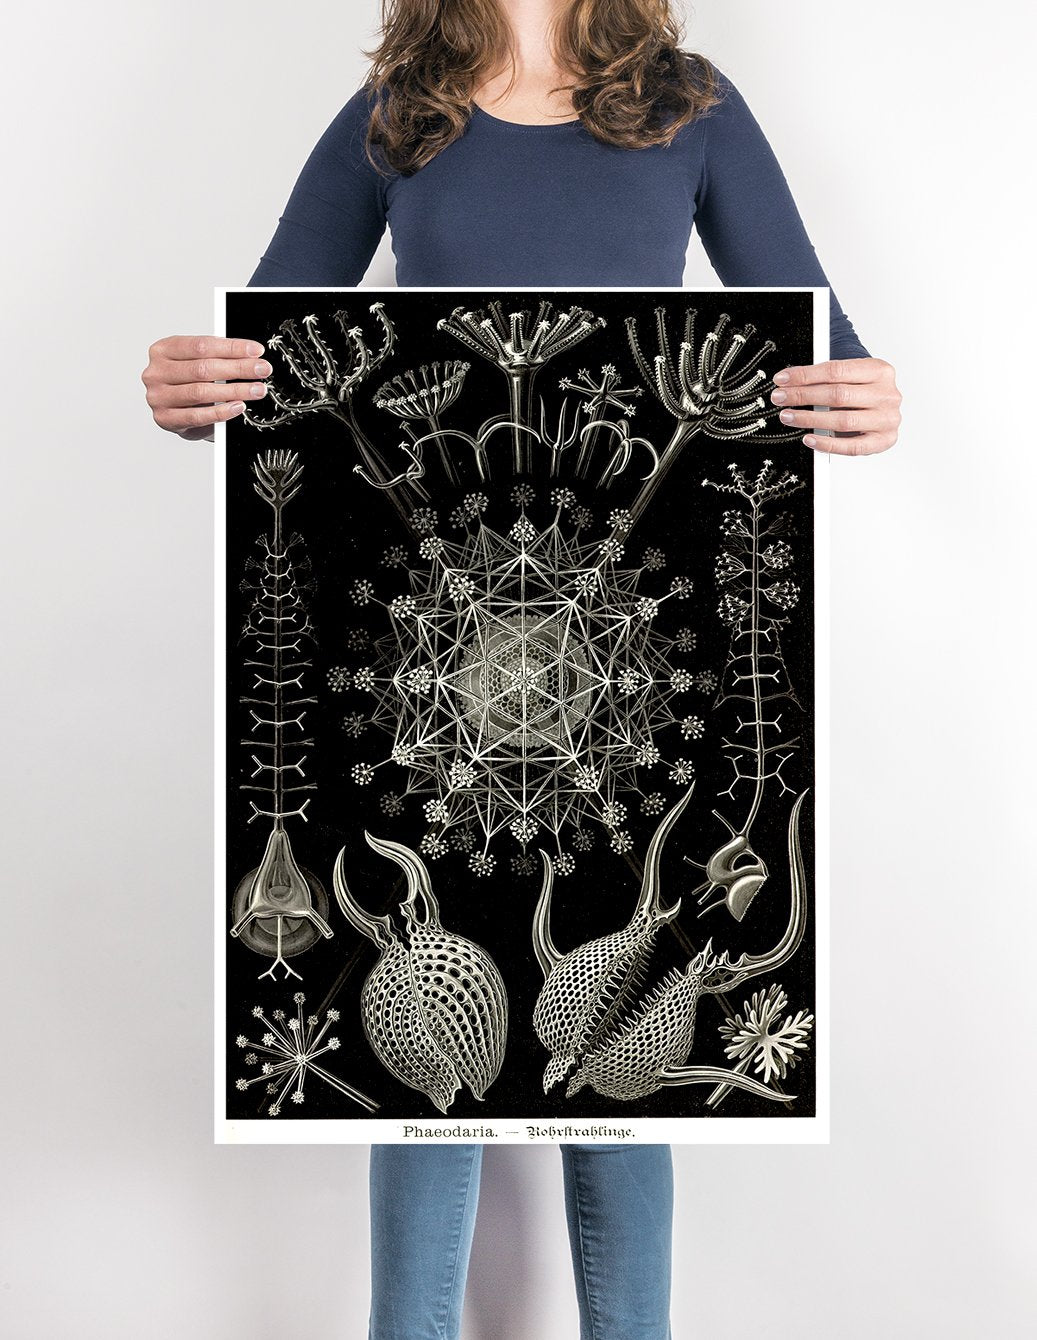 Phaeodaria by Ernest Haeckel Poster